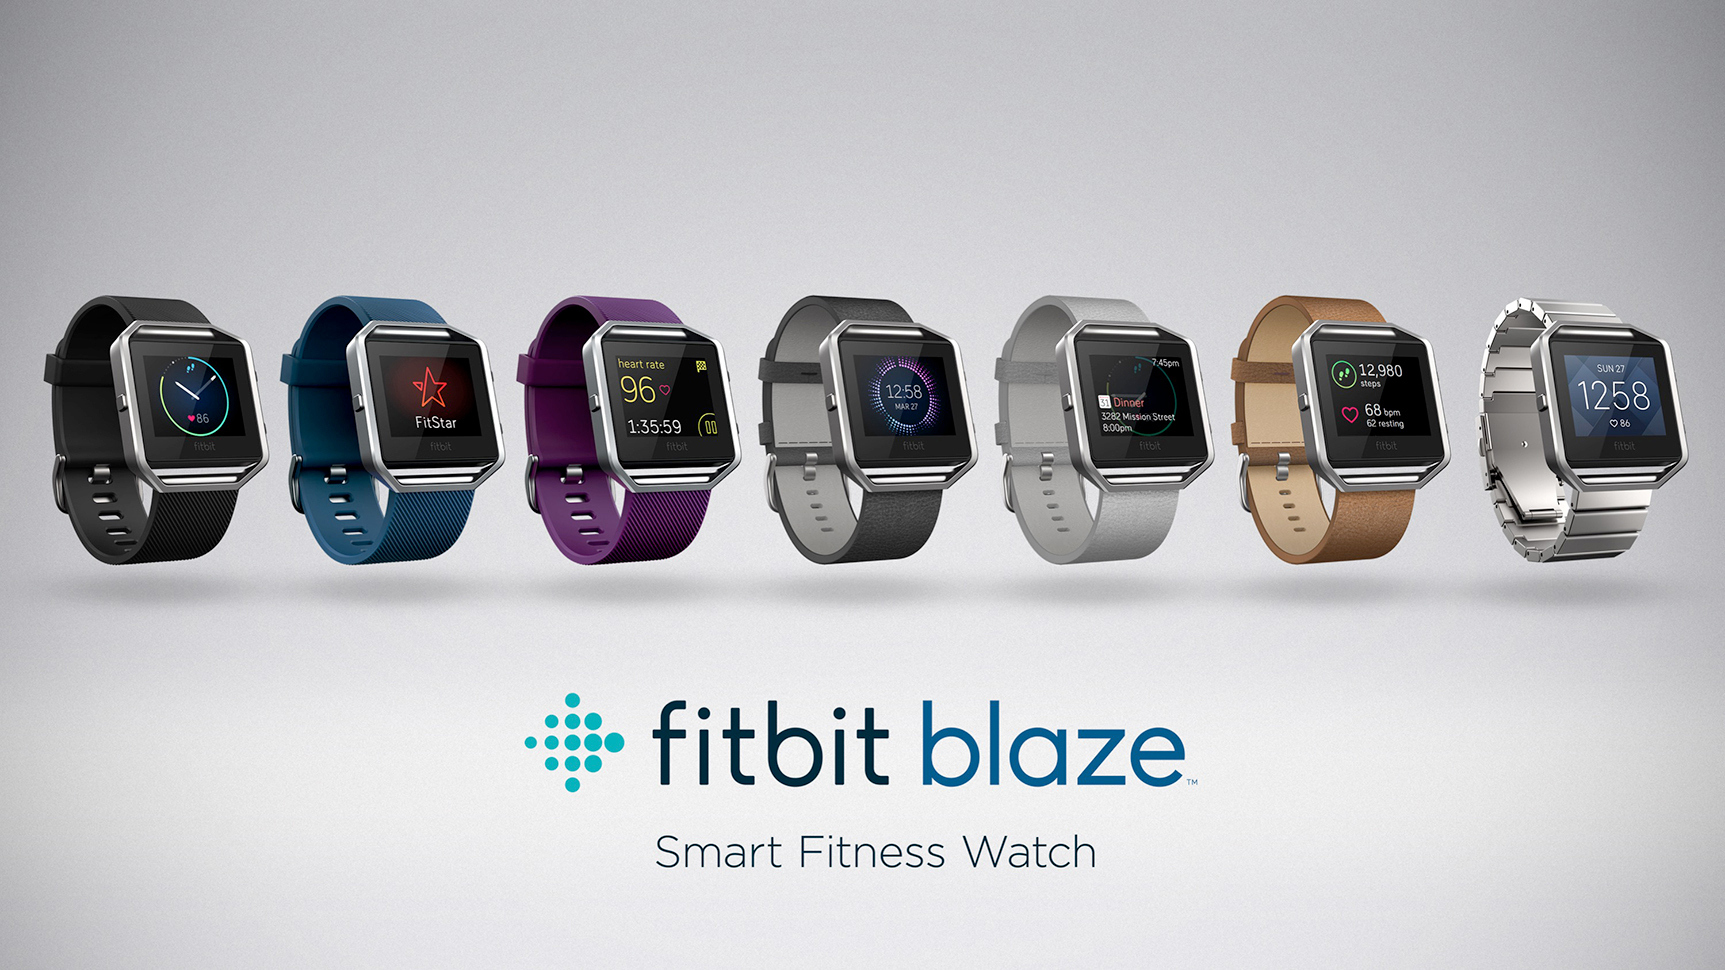 Fitbit's latest Blaze activity tracker 